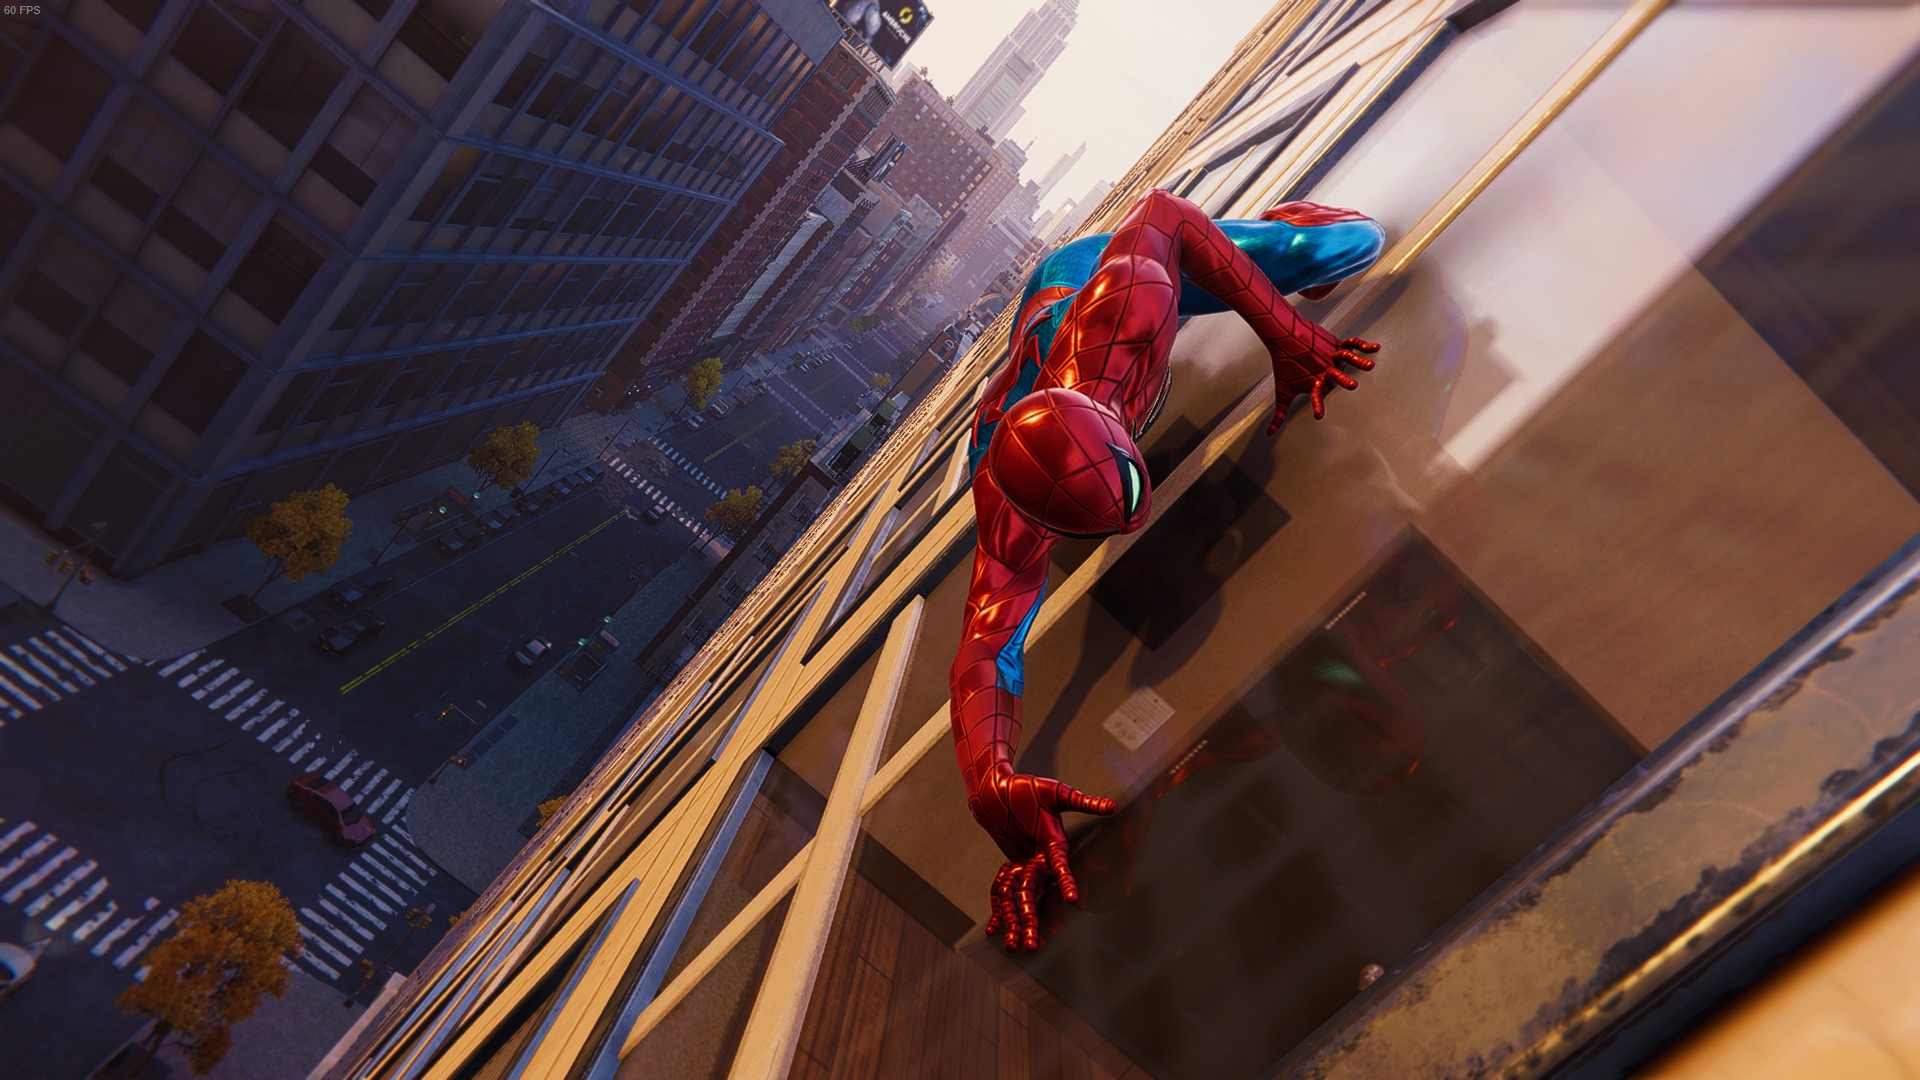 General 1920x1080 Spider-Man Spider-Man (2018) PlayStation Marvel Comics bodysuit reflection building street sunset glow superhero CGI